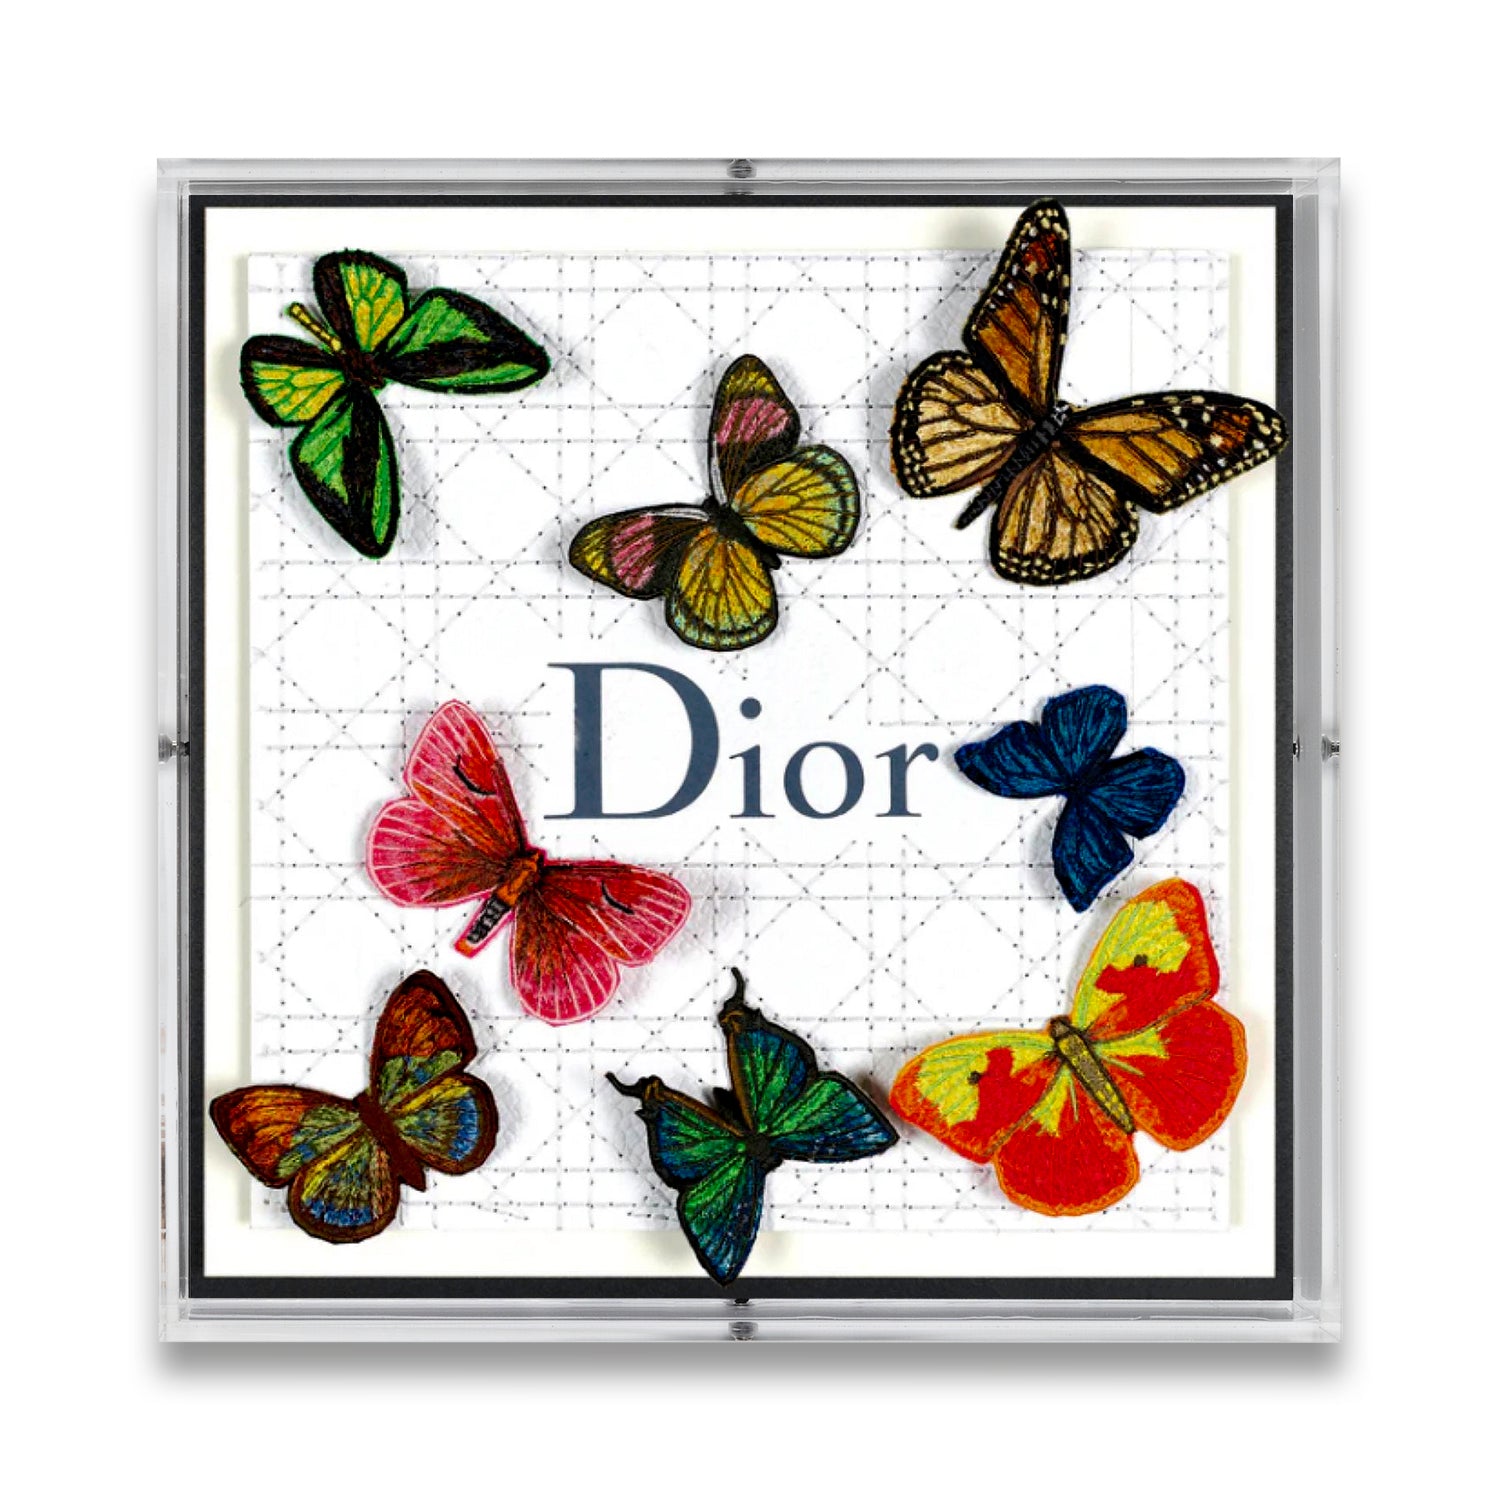 Dior White Butterfly Swarm by Stephen Wilson (12x12x2